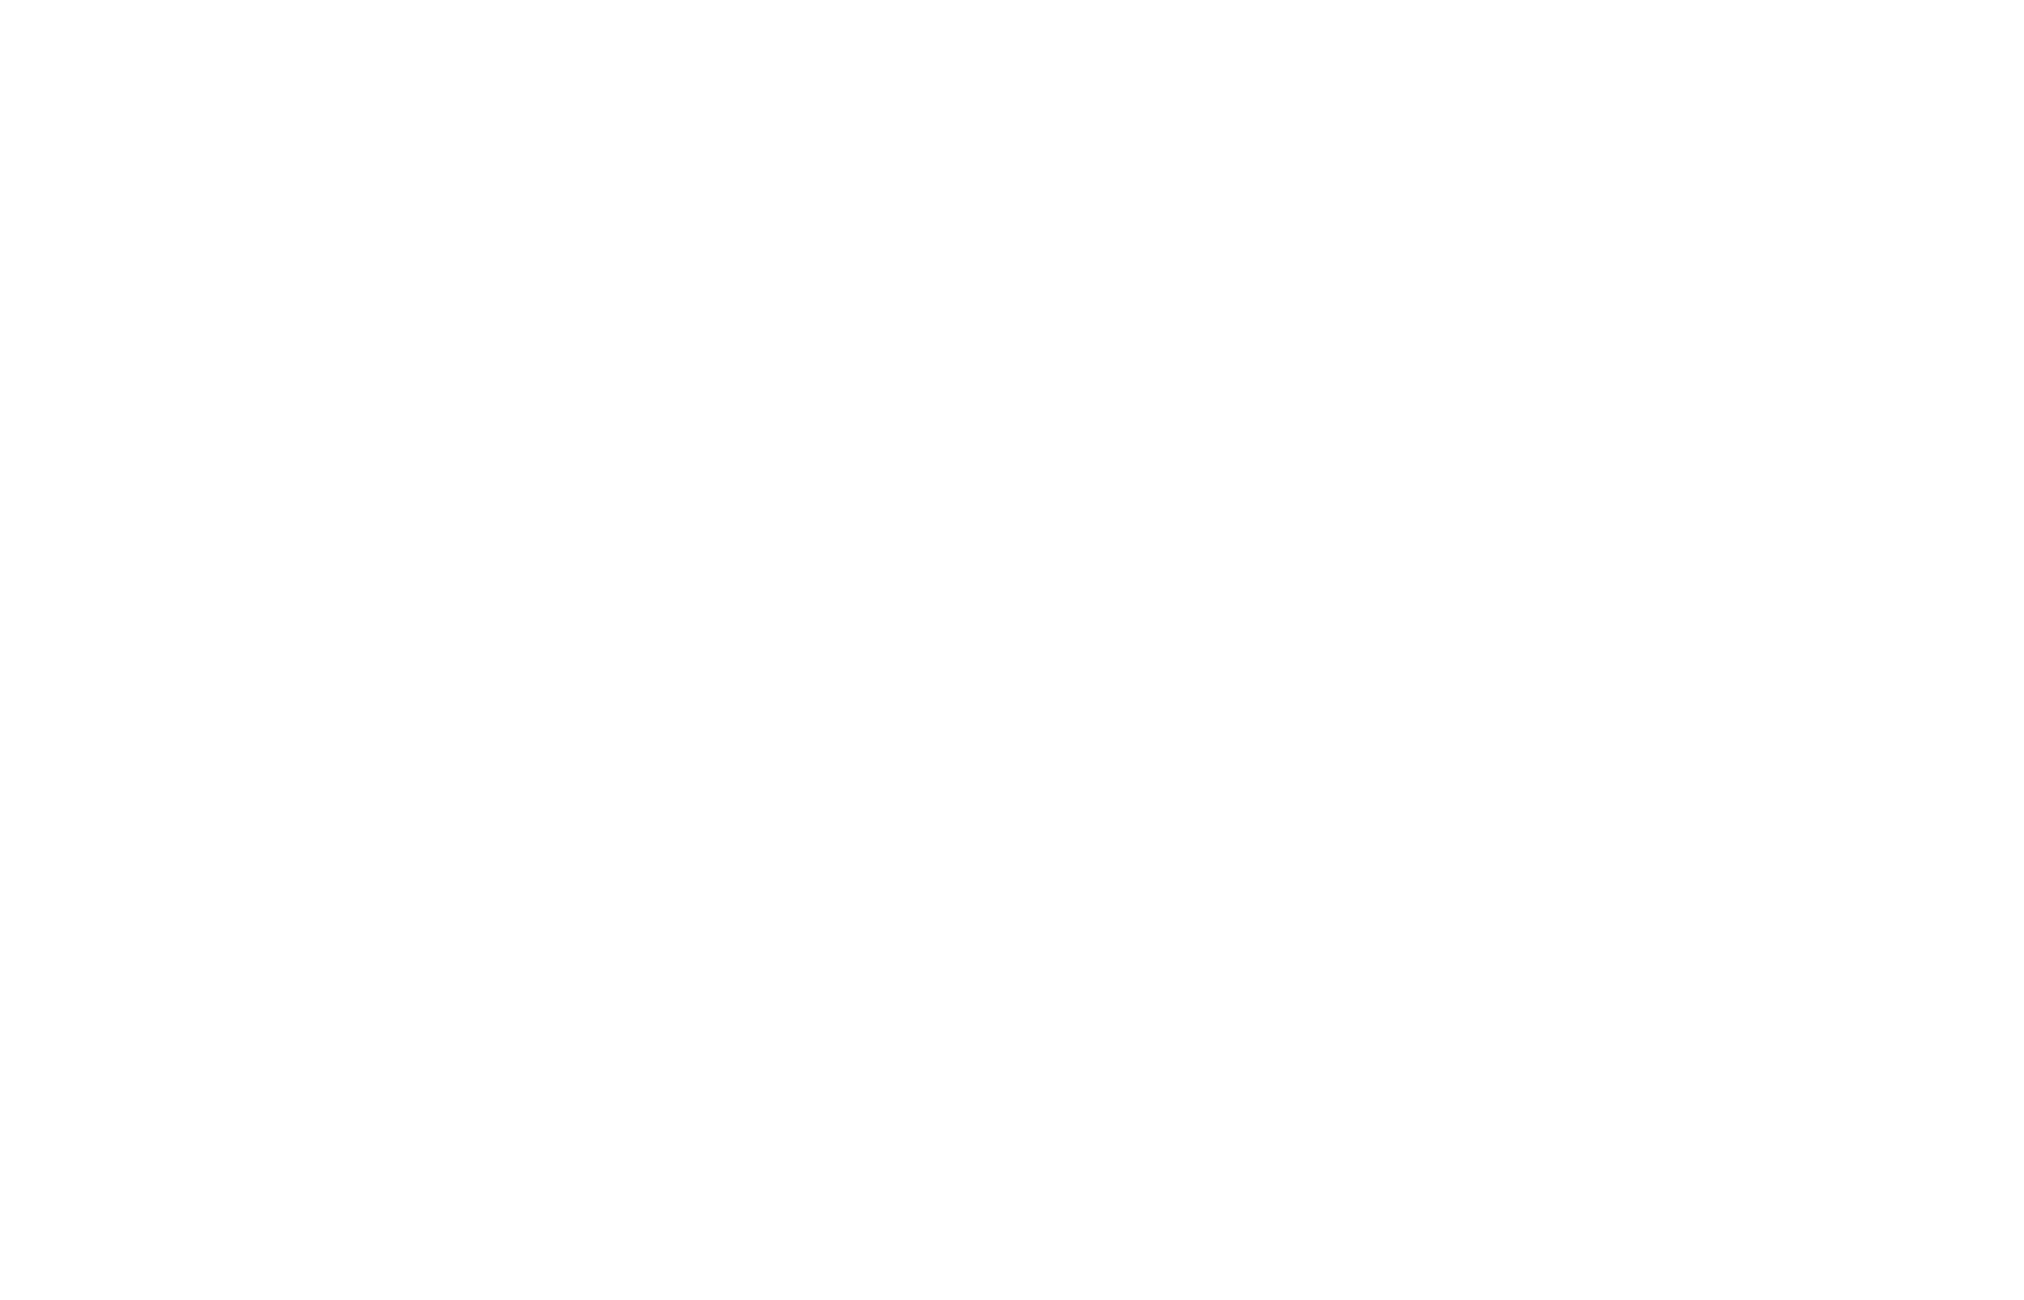 A theme logo of Food King